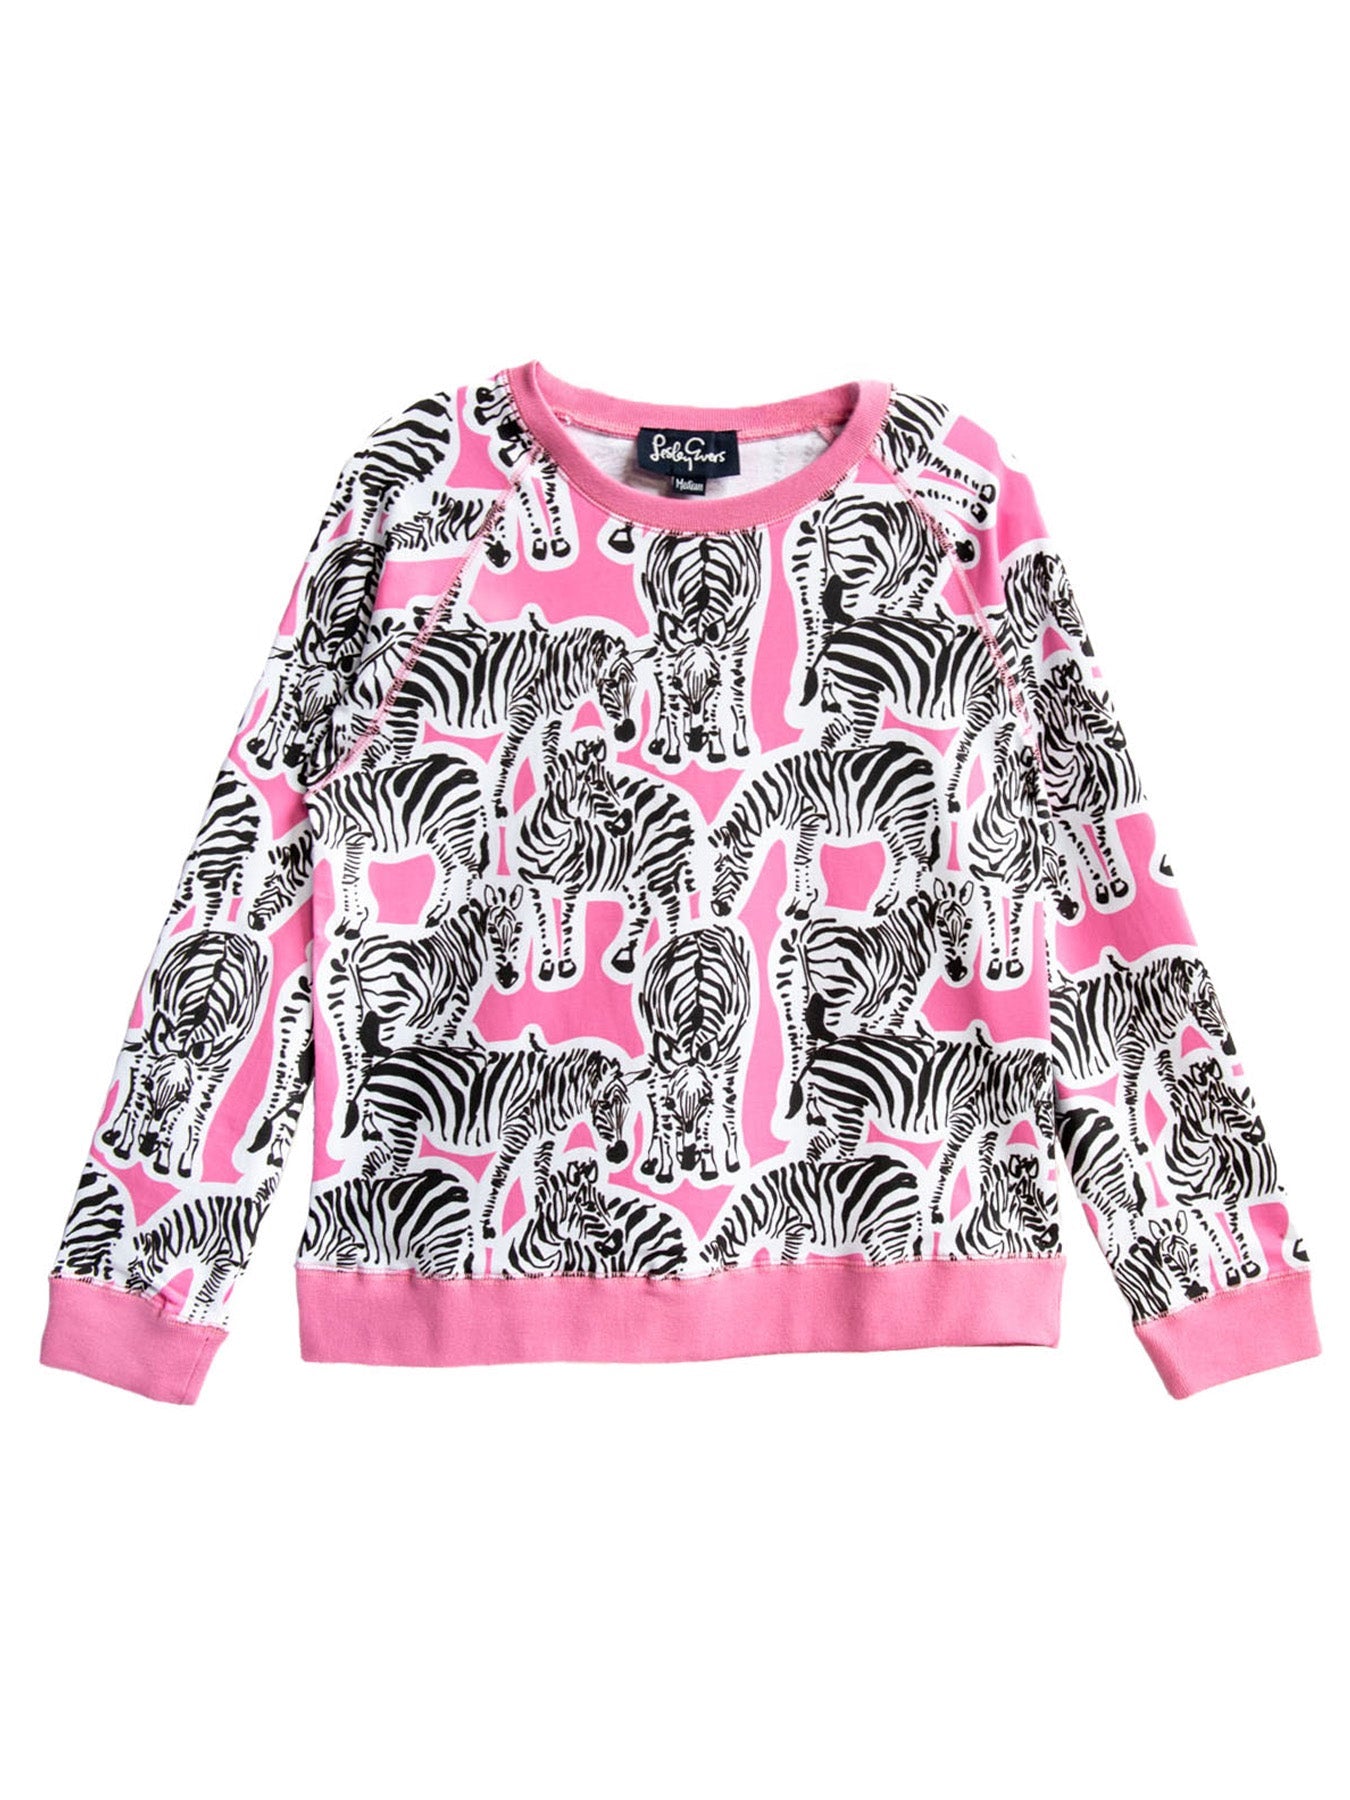 DARCY sweatshirt Zebras Pink - Lesley Evers-Shop-Shop/All Products-Shop/Separates